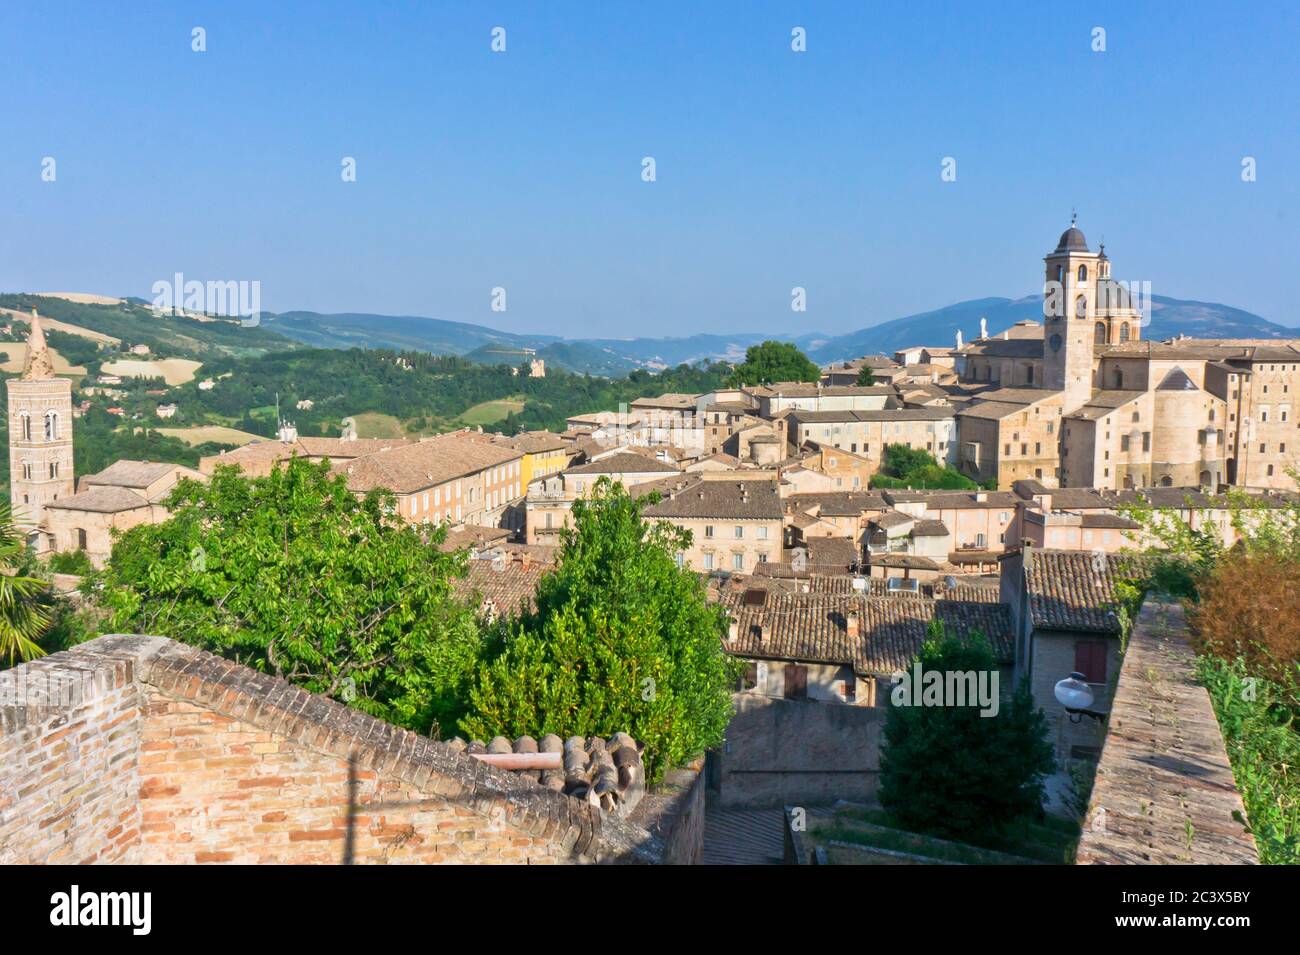 Old city street view Urbino, Italy, Europe Stock Photo - Alamy